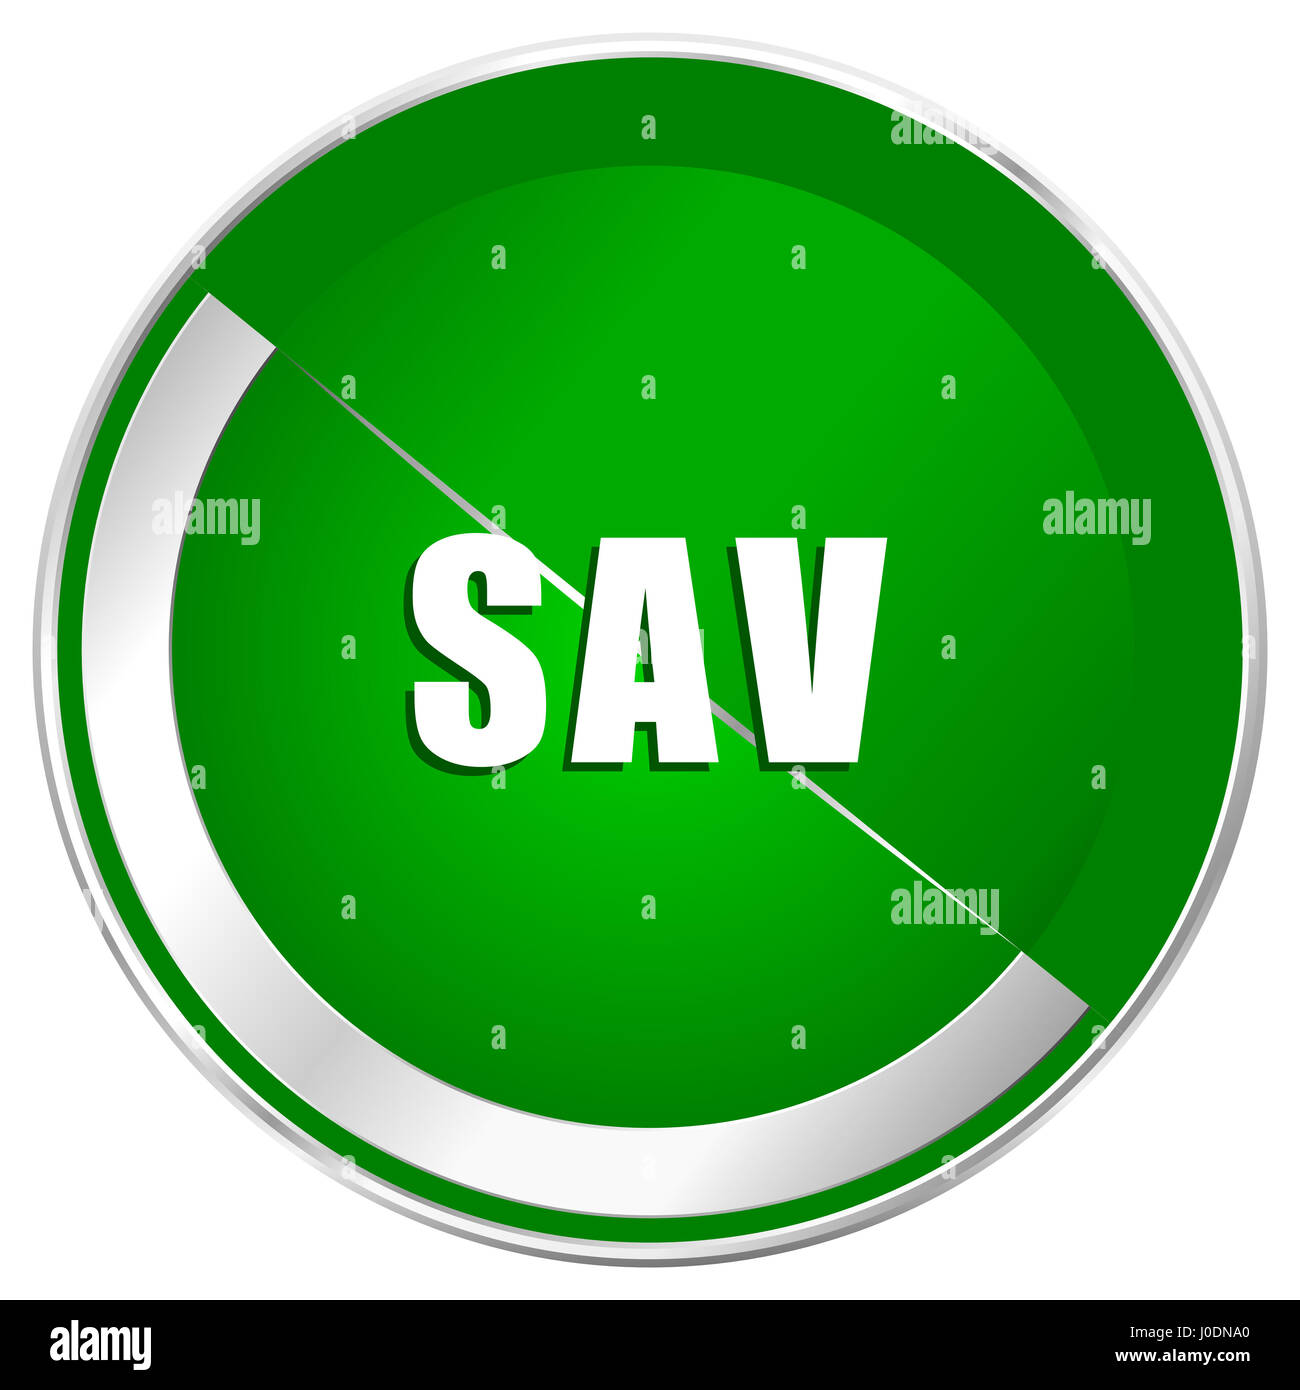 Sav silver metallic border green web icon for mobile apps and internet. Stock Photo